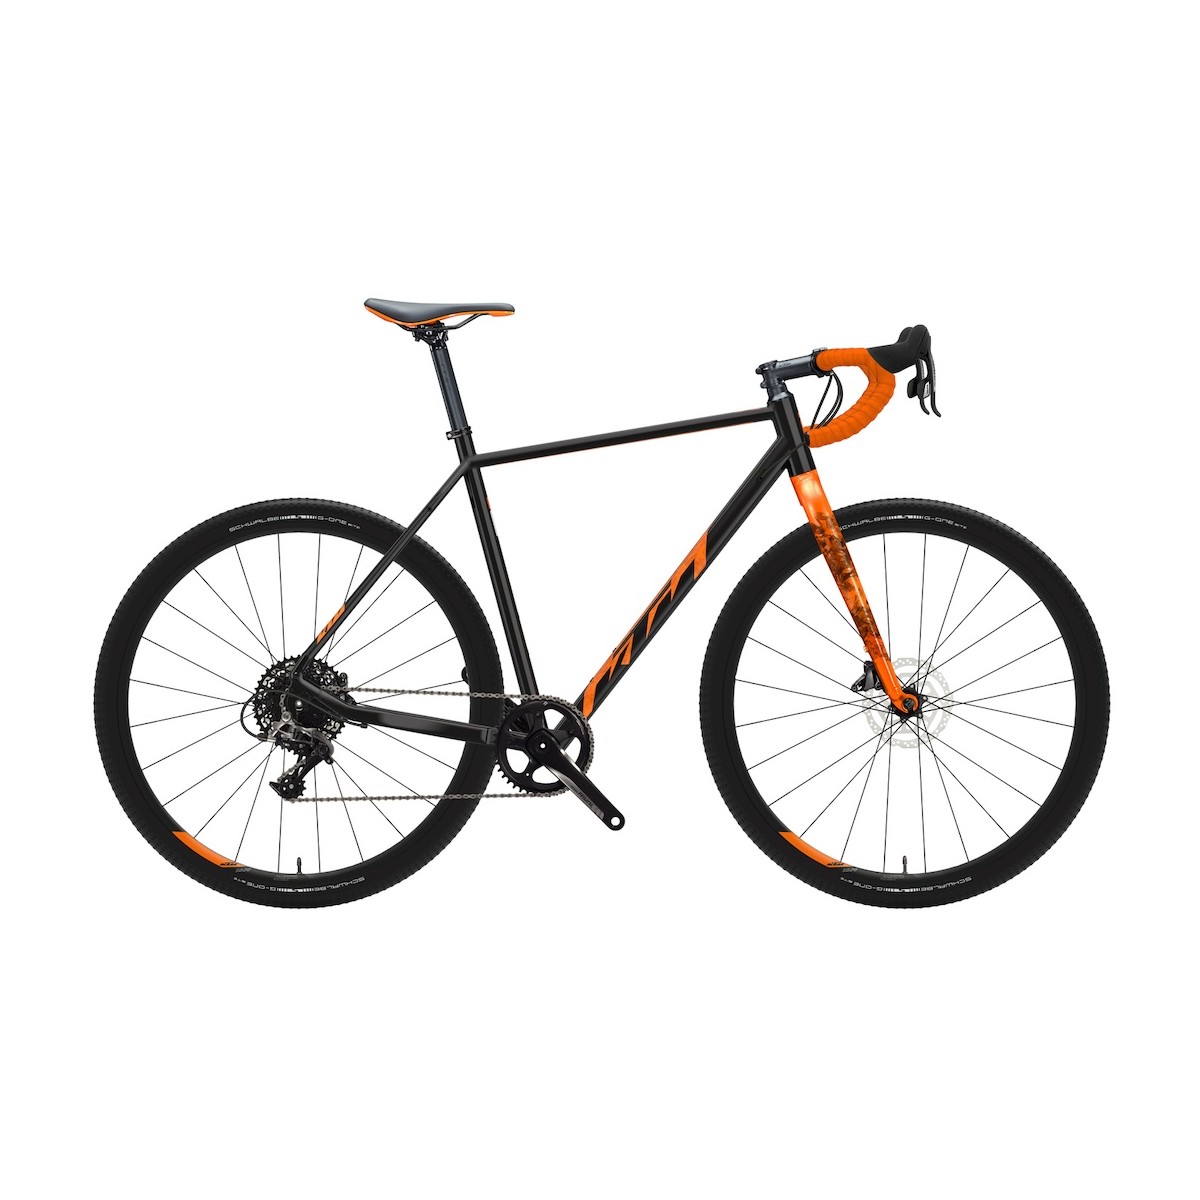 KTM X-STRADA 30 gravel bicycle - black/orange - 2022